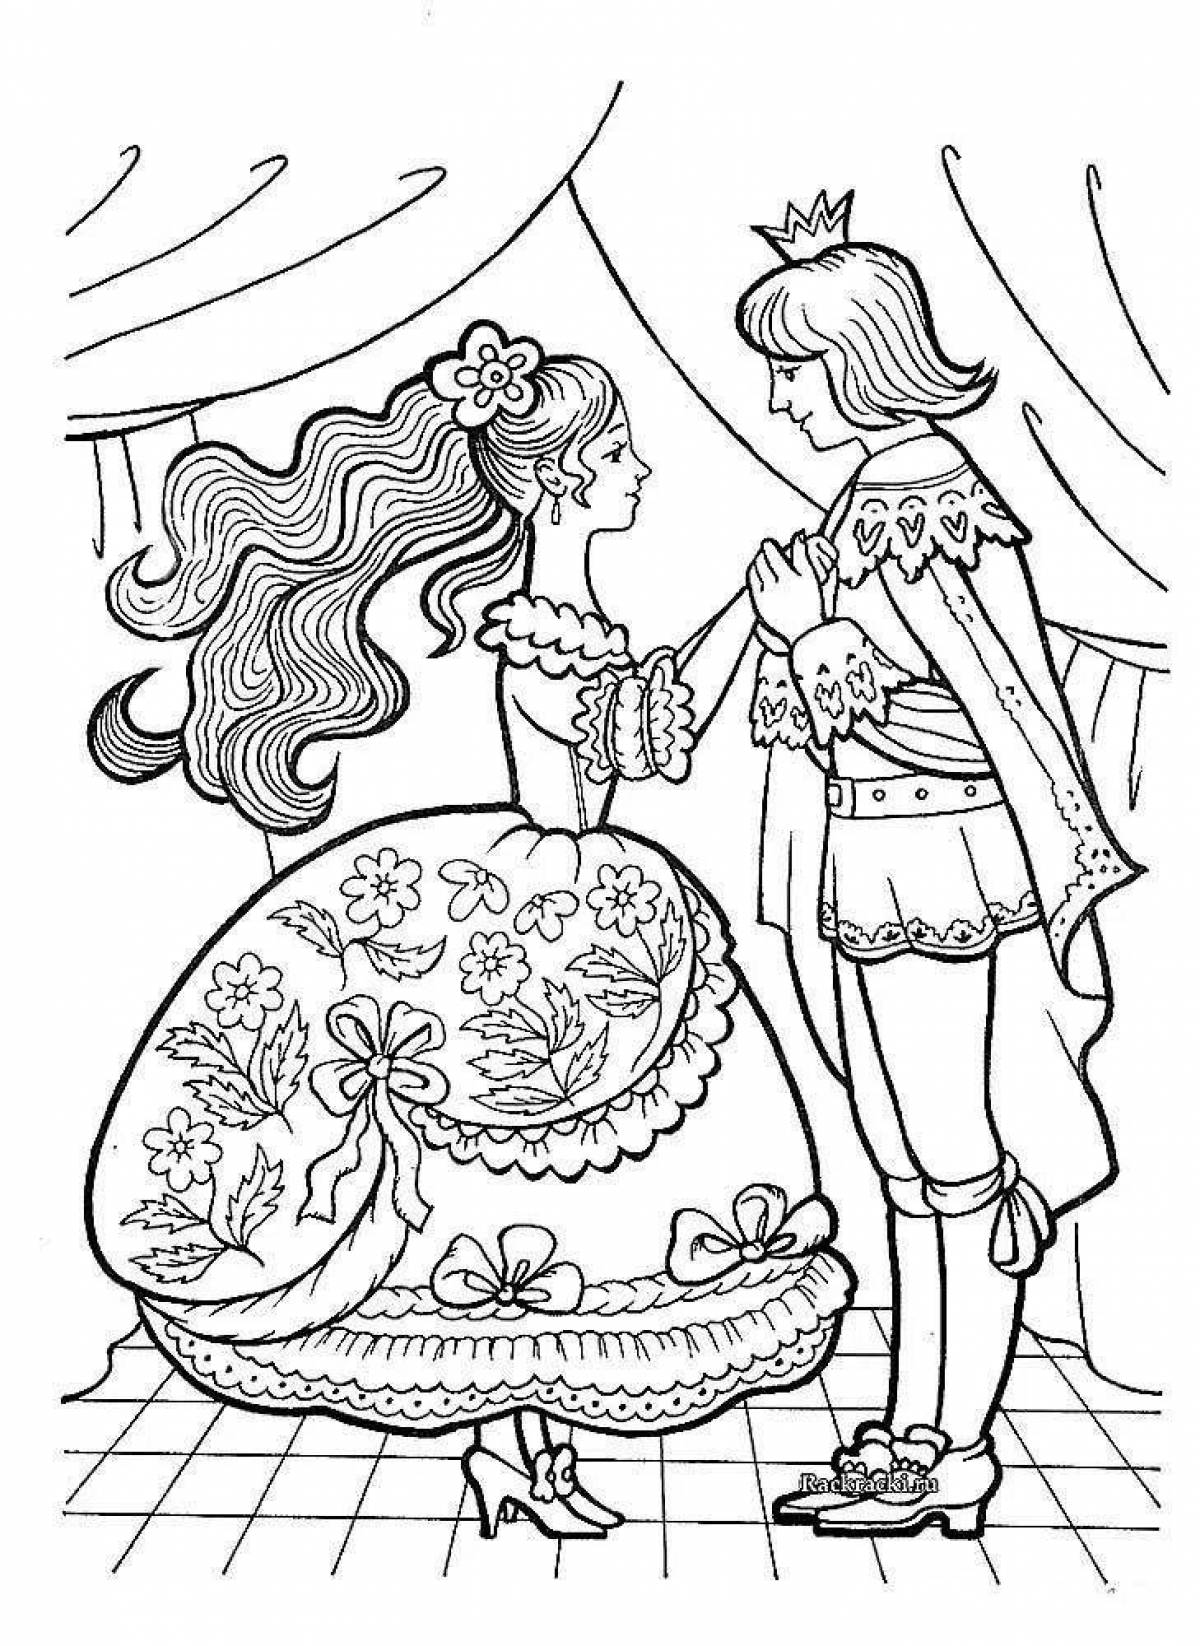 Cute cinderella and charles perrault coloring book